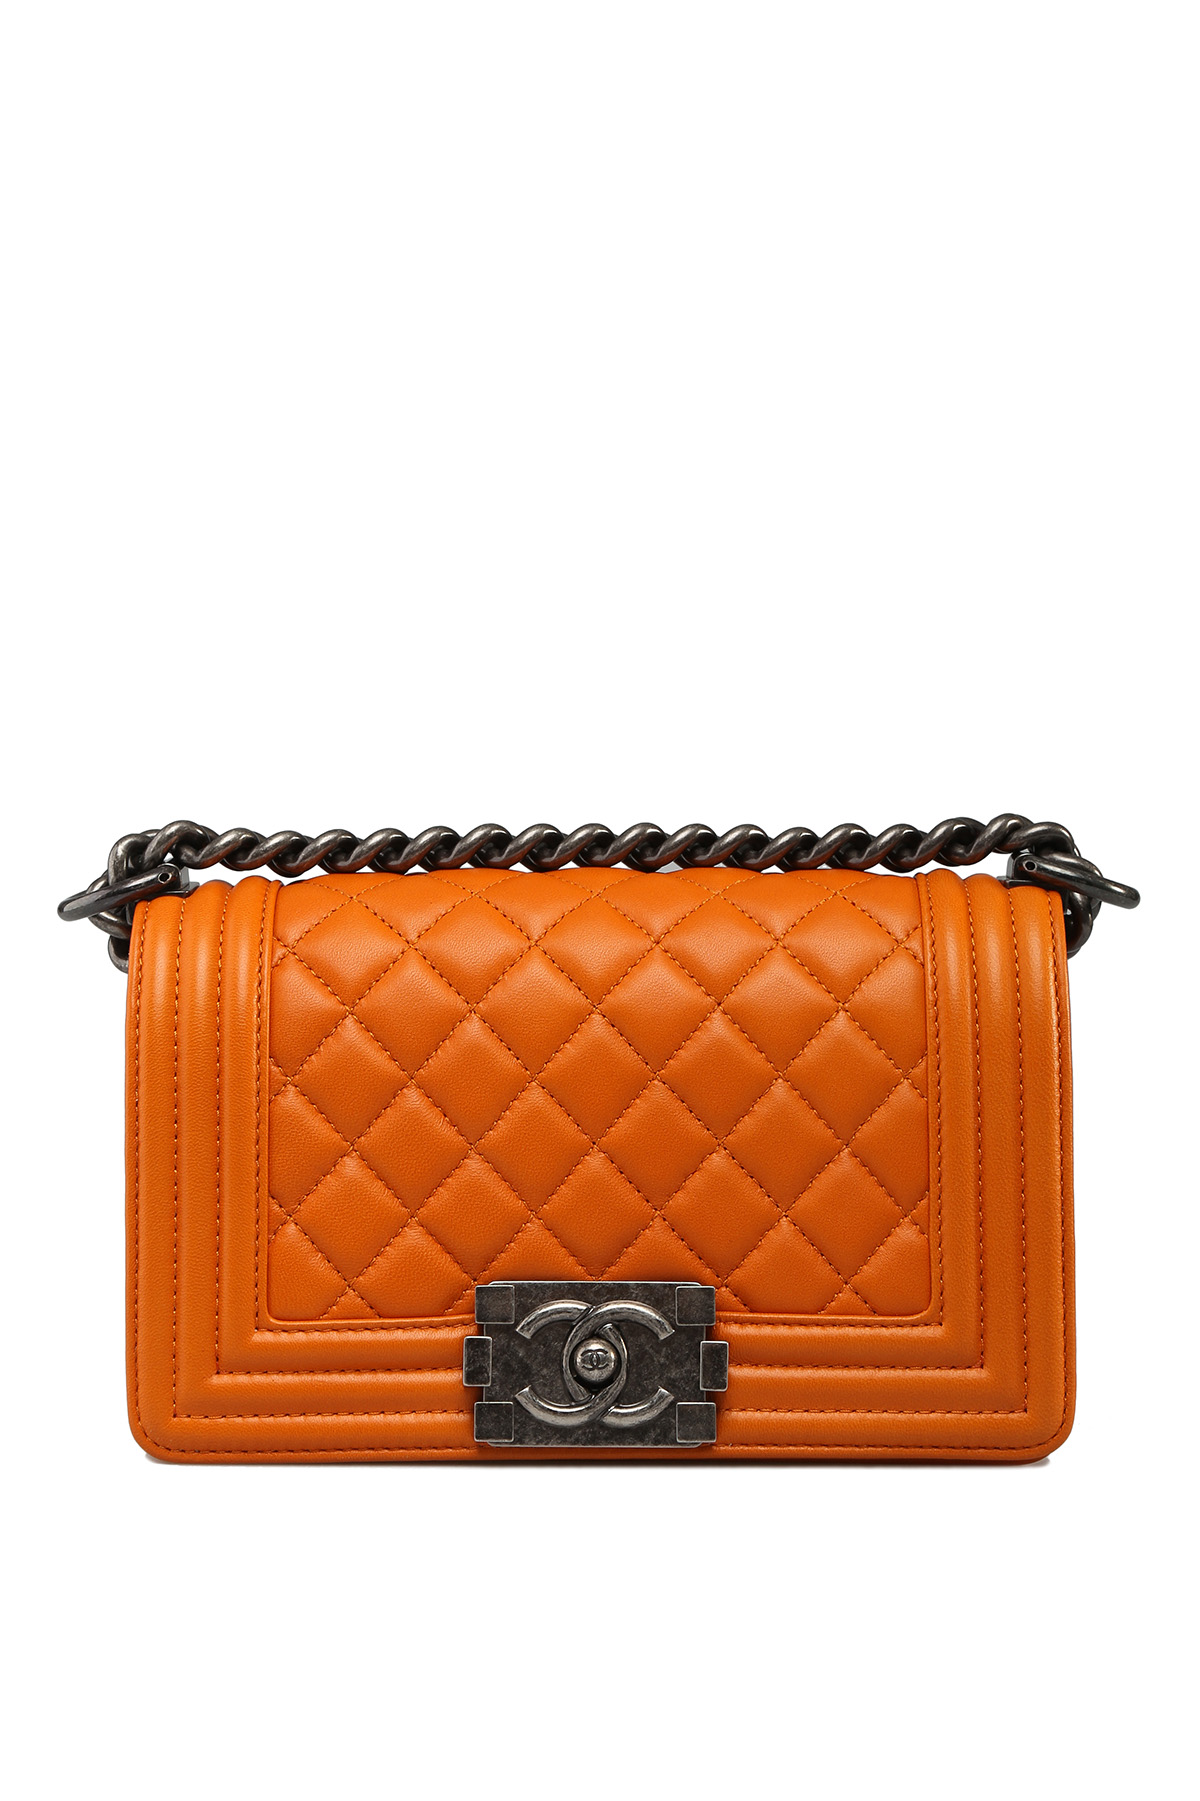 Chanel Small Boy Bag in Orange Lambskin with Ruthenium Hardware